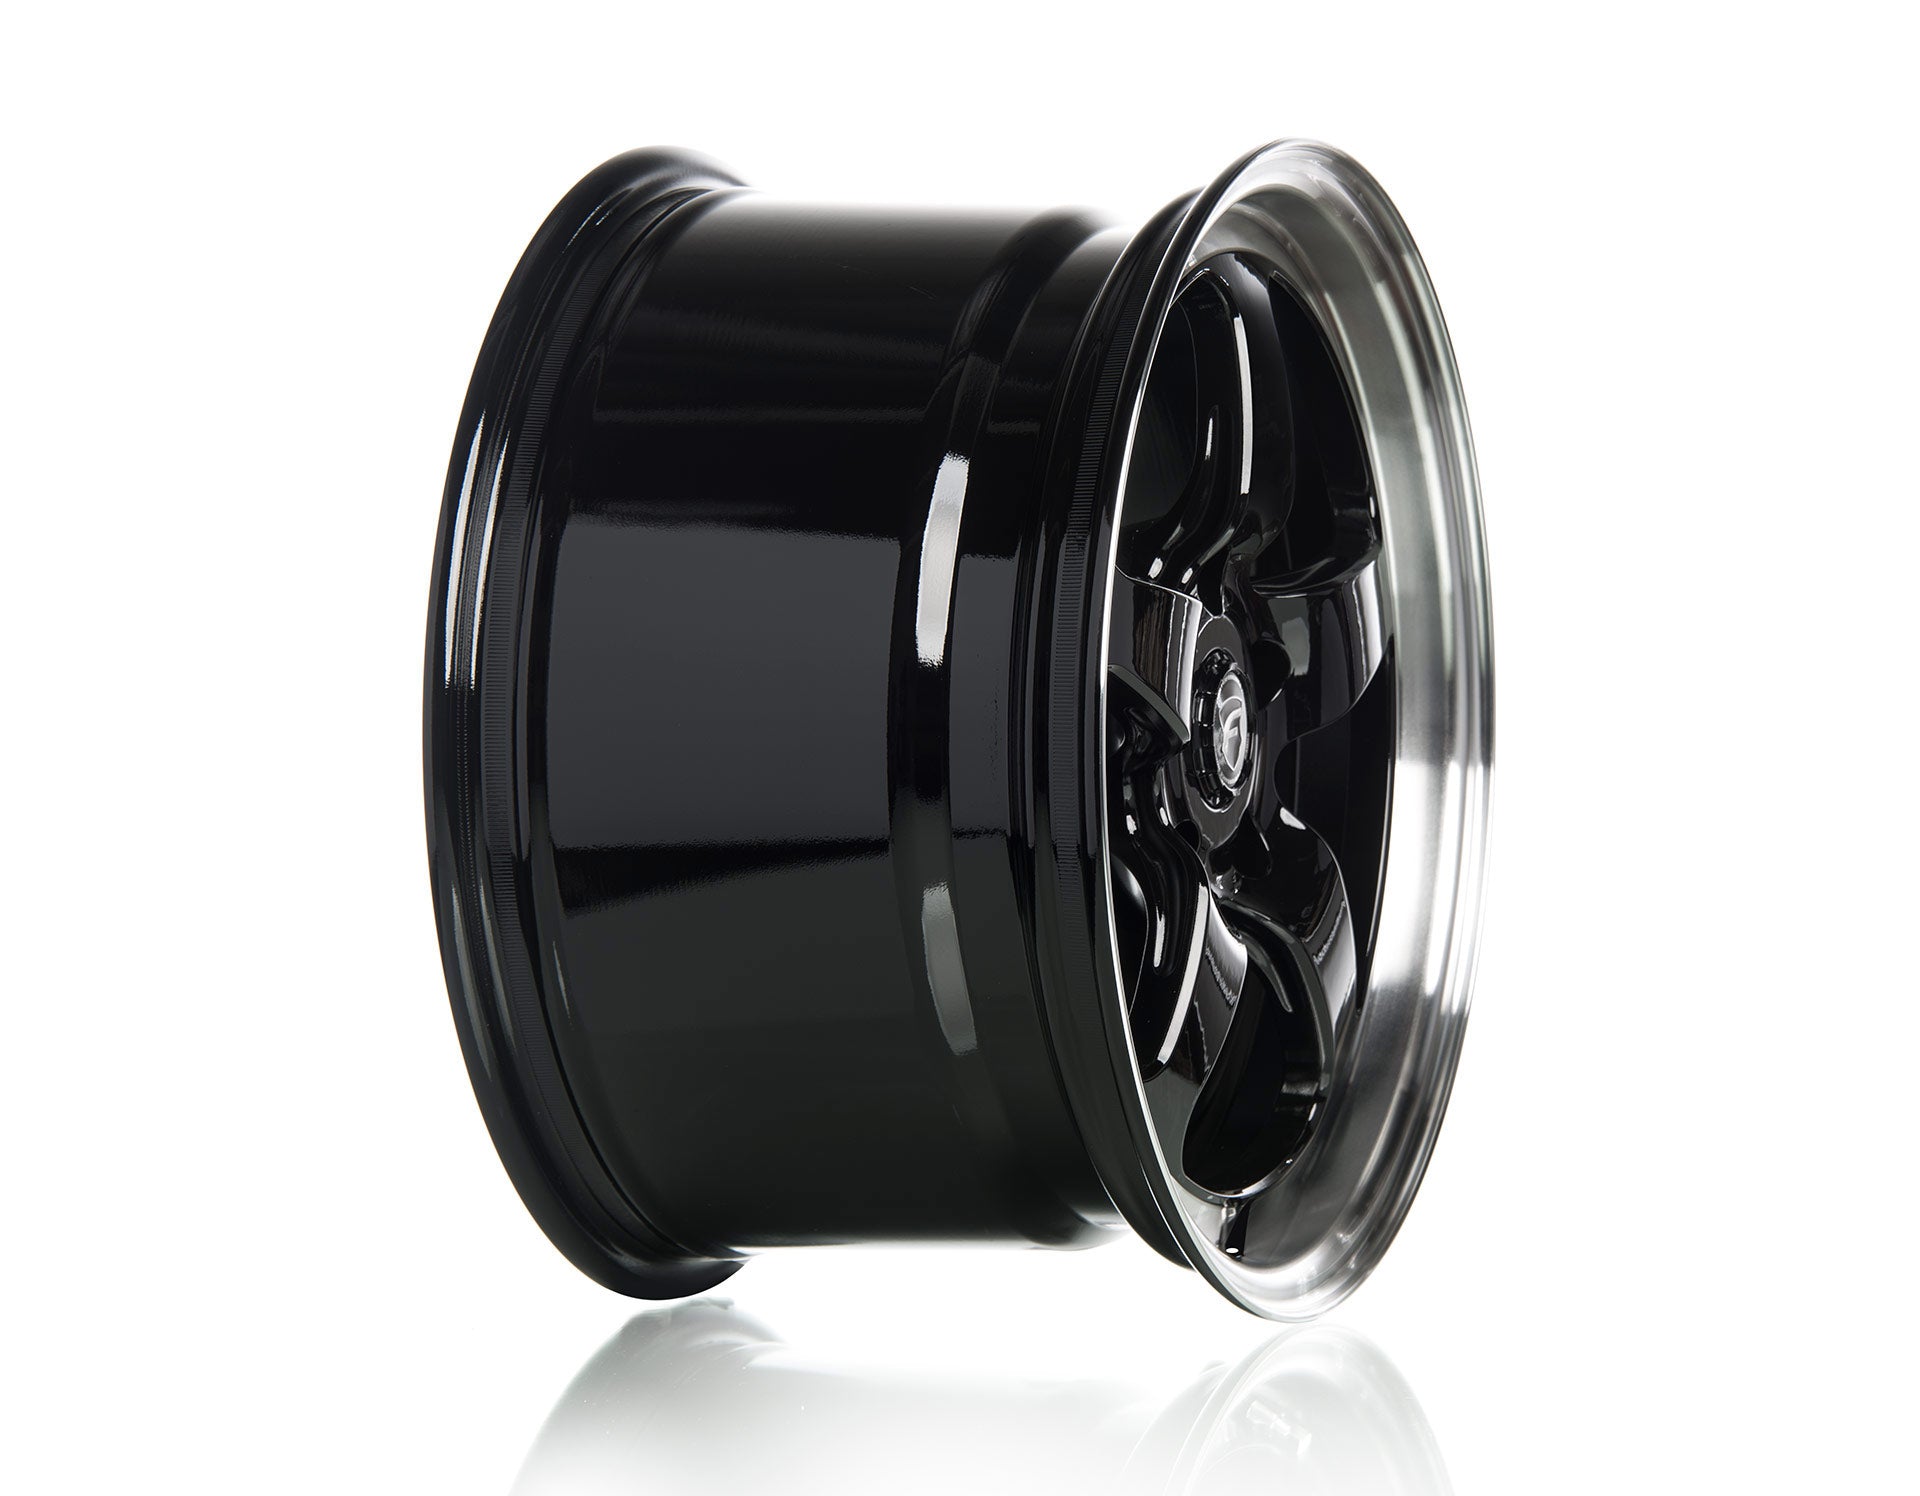 Forgestar D5 Drag Racing Wheels - Gloss Black w/Machined Lip - 18x10 - Sold Individually - Motorsports LA